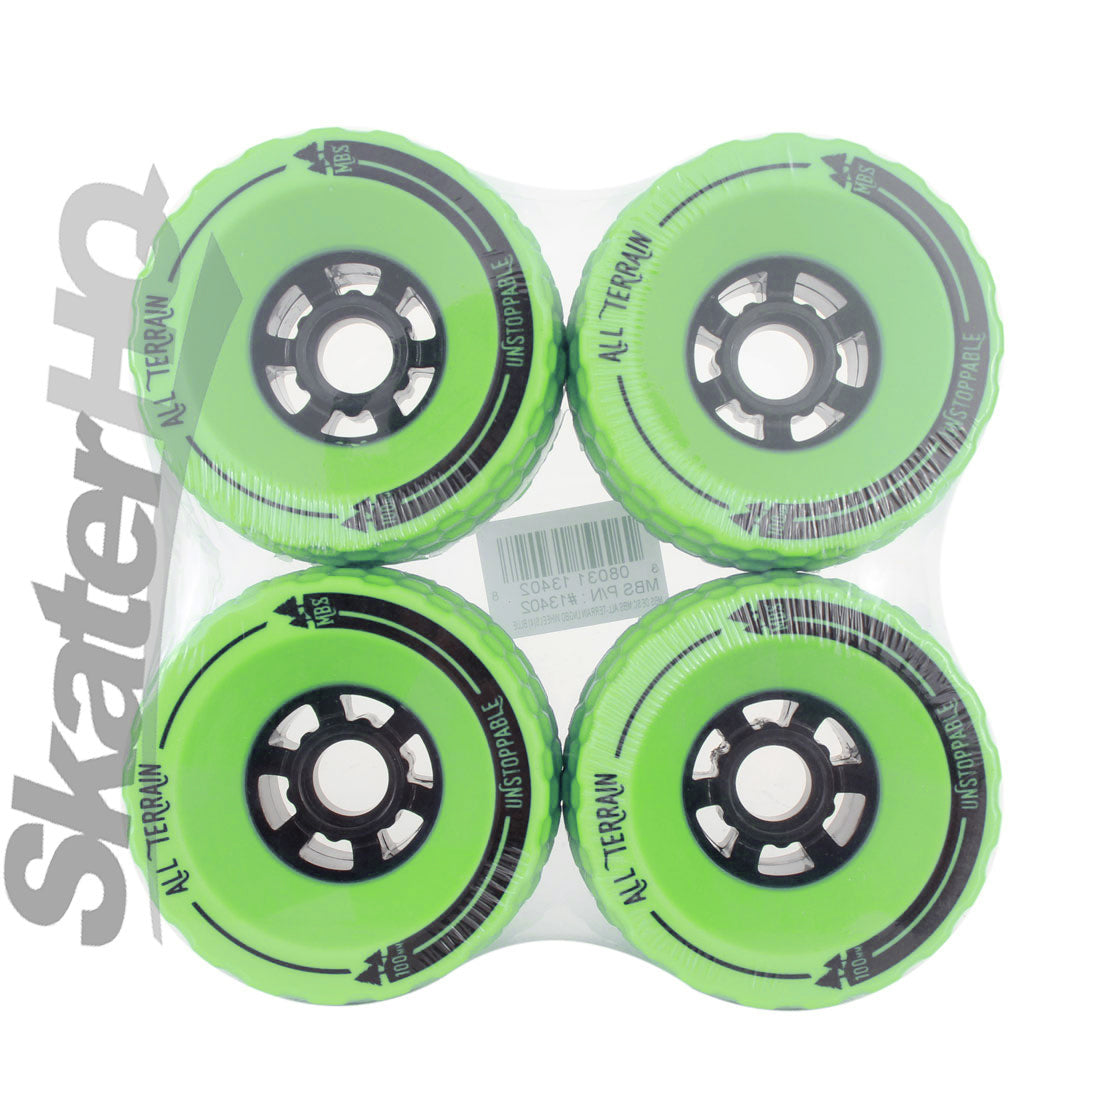 MBS All-Terrain 100mm Wheels 4pk - Green Skateboard Wheels